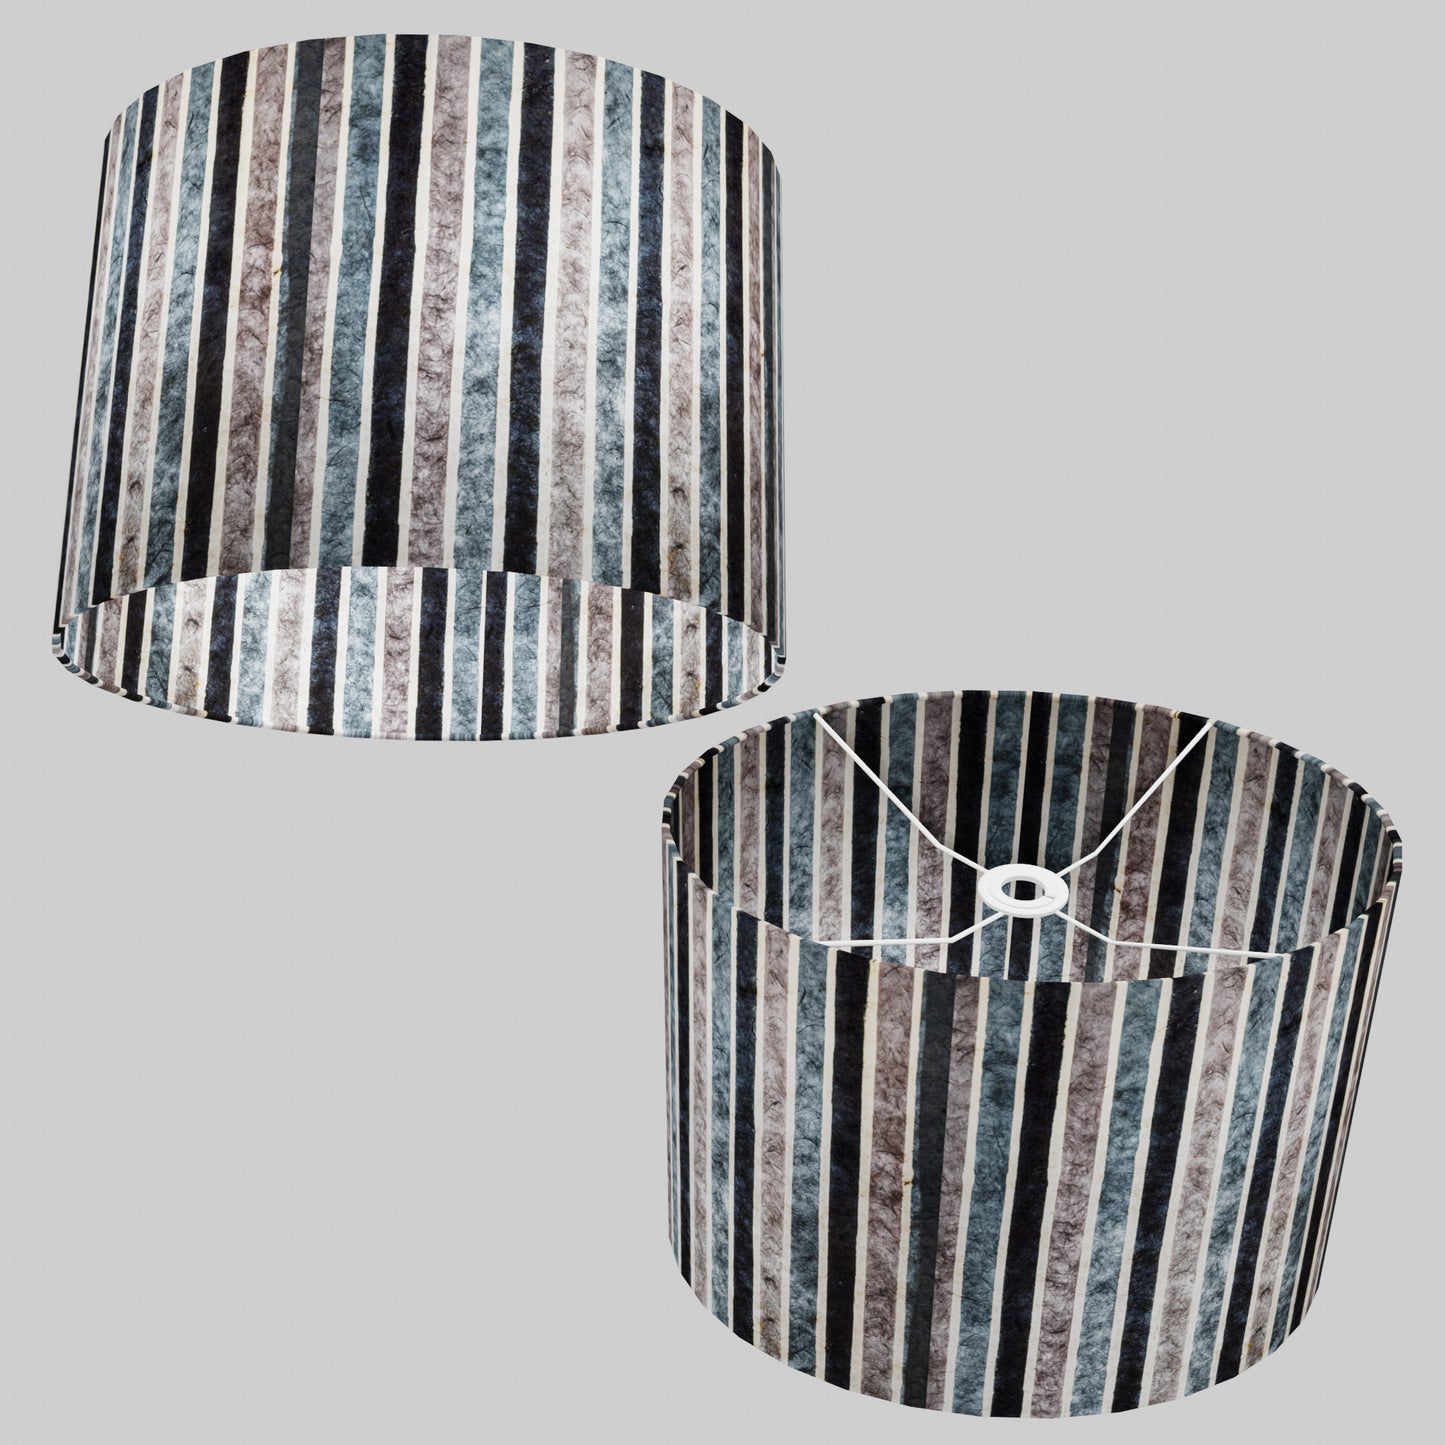 Oval Lamp Shade - P08 - Batik Stripes Grey, 40cm(w) x 30cm(h) x 30cm(d)